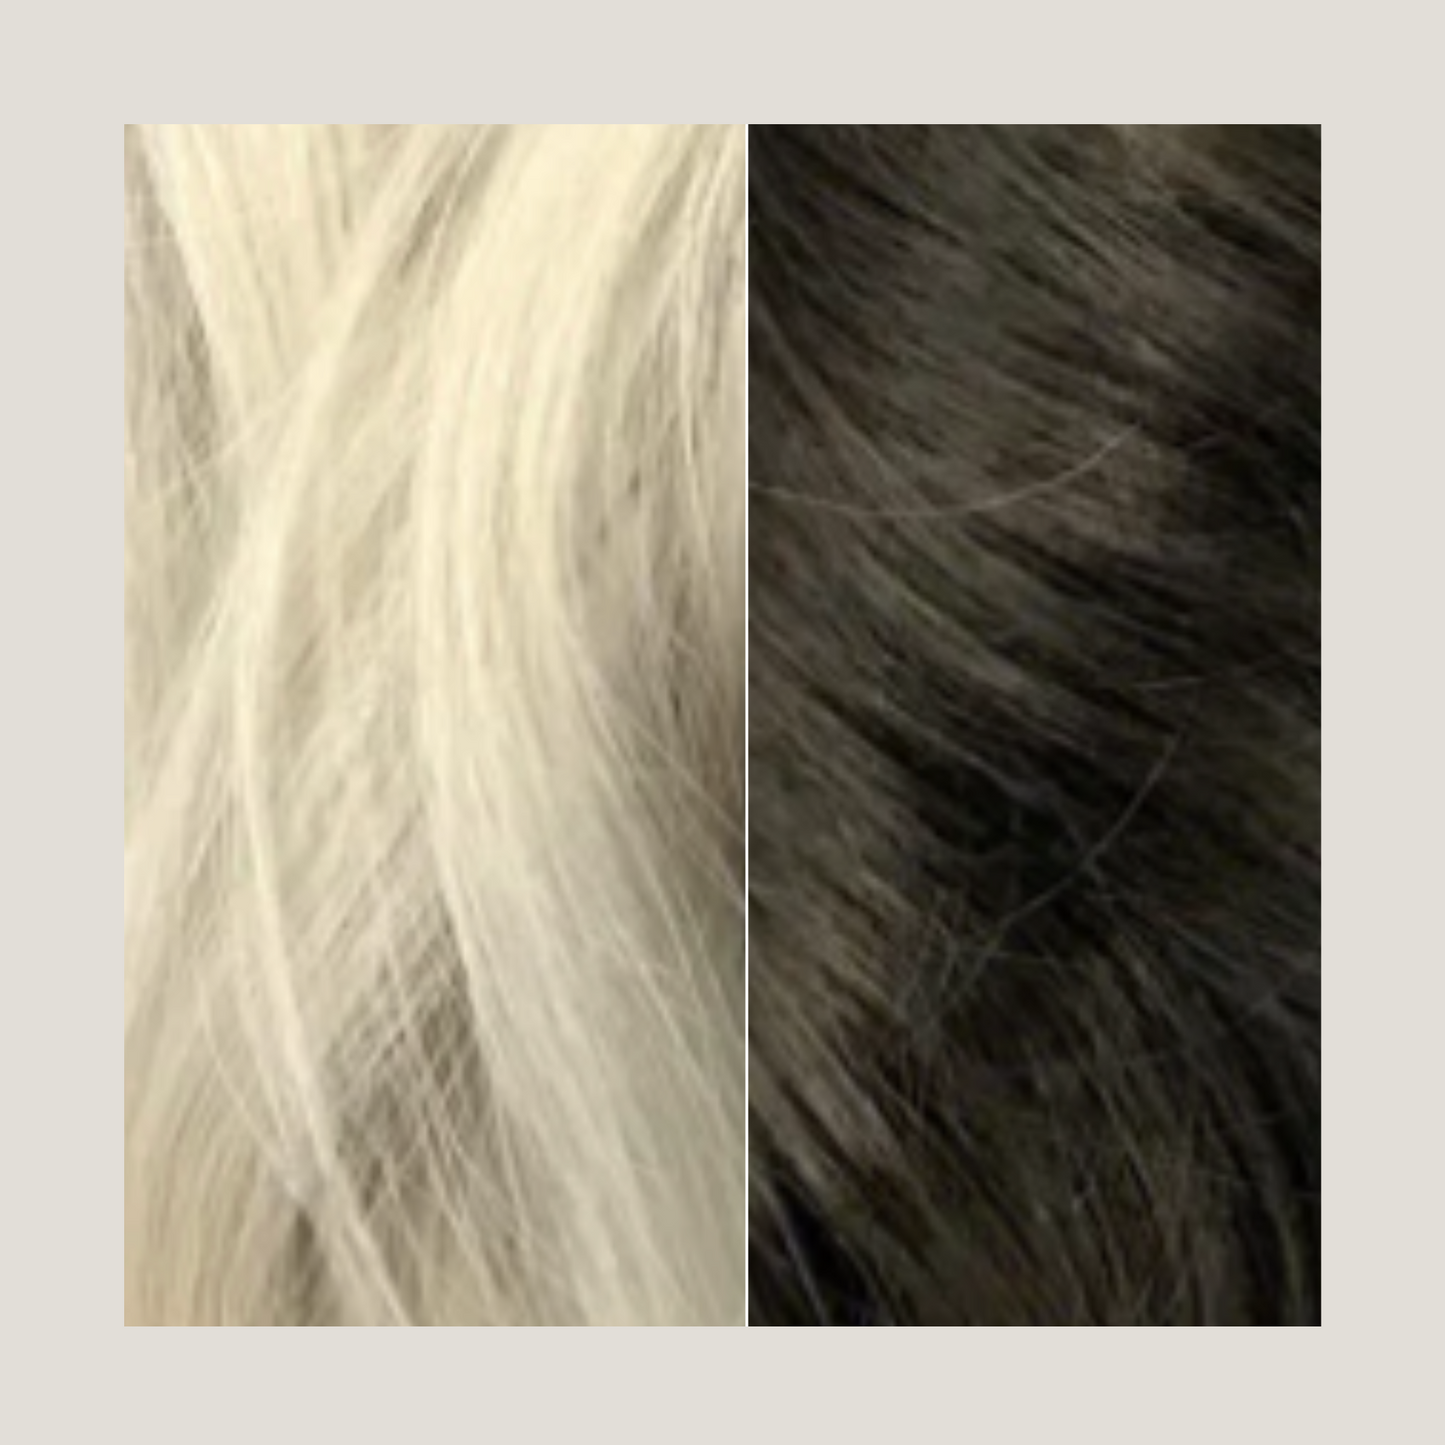 Extensiones europeas de cabello humano virgen, microanillos i-Tip de 0,7 g